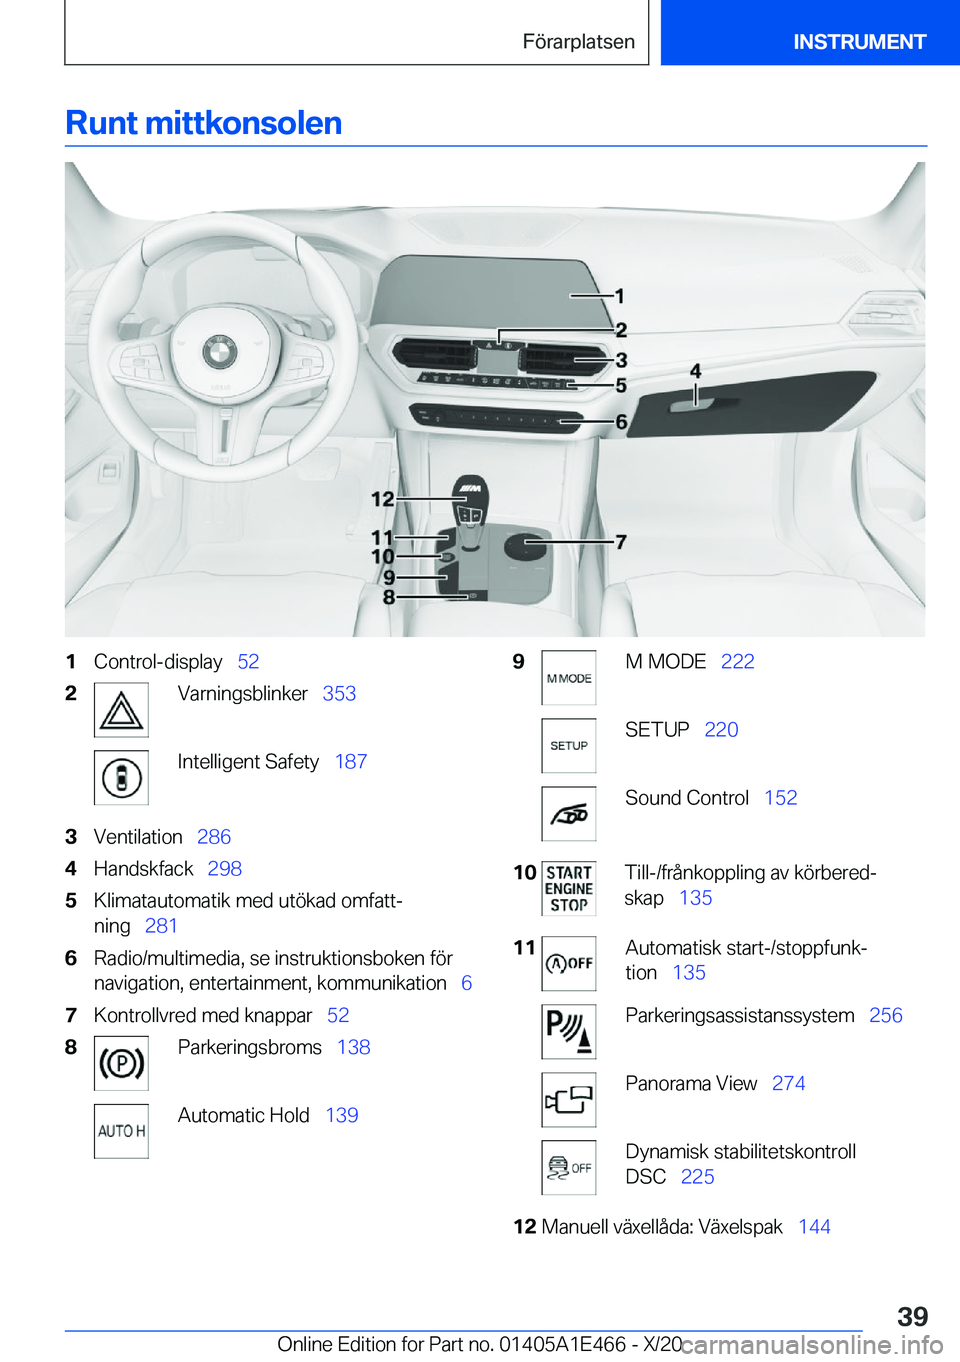 BMW M3 2021  InstruktionsbÖcker (in Swedish) �R�u�n�t��m�i�t�t�k�o�n�s�o�l�e�n�1�C�o�n�t�r�o�l�-�d�i�s�p�l�a�y\_�5�2�2�V�a�r�n�i�n�g�s�b�l�i�n�k�e�r\_ �3�5�3�I�n�t�e�l�l�i�g�e�n�t��S�a�f�e�t�y\_ �1�8�7�3�V�e�n�t�i�l�a�t�i�o�n\_�2�8�6�4